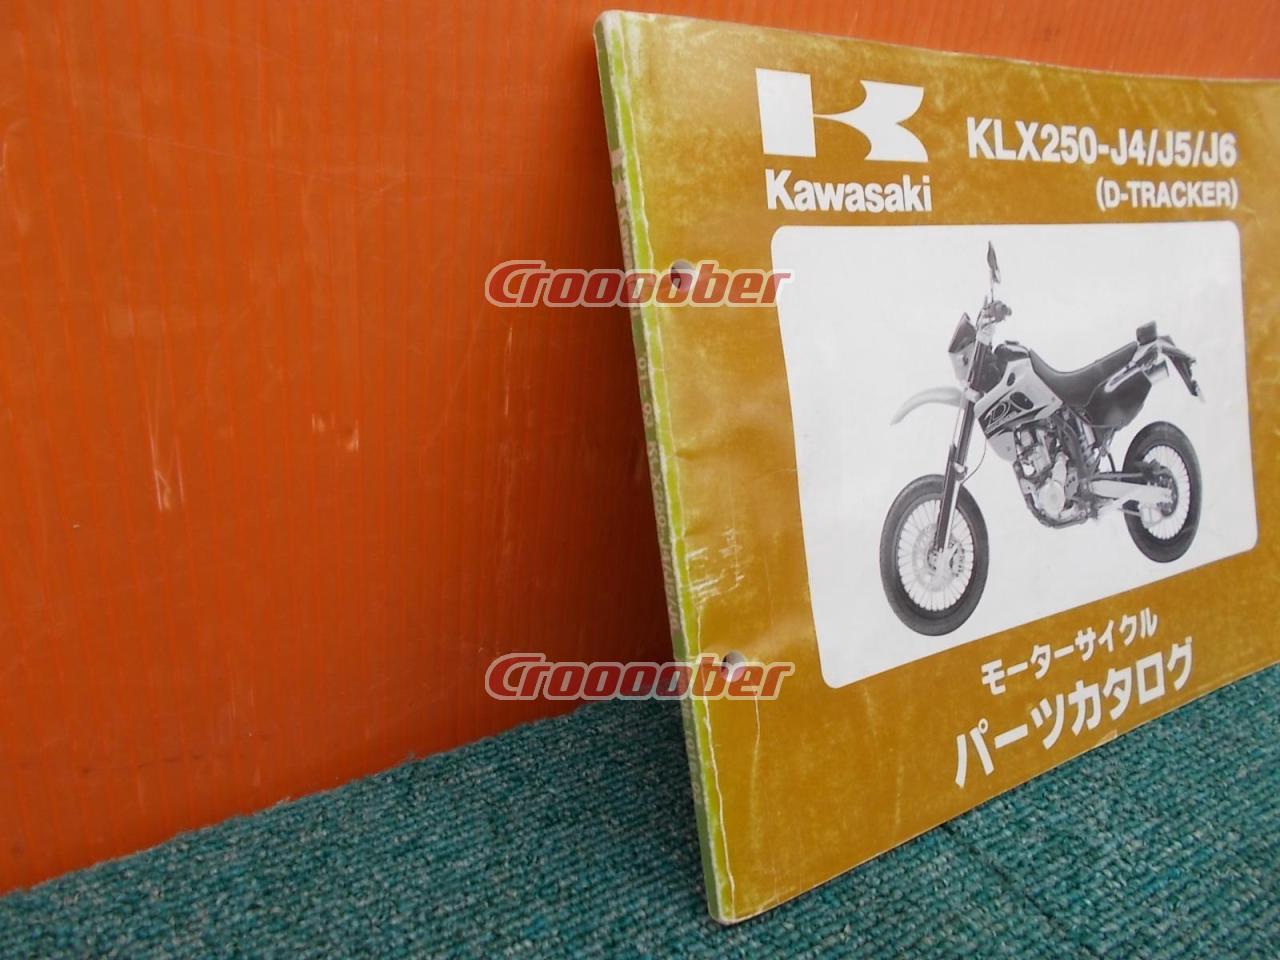 KAWASAKI(カワサキ) 純正パーツリスト Dトラッカー250 | その他(バイク用品) その他バイク用品(二輪)パーツの通販なら |  Croooober(クルーバー)